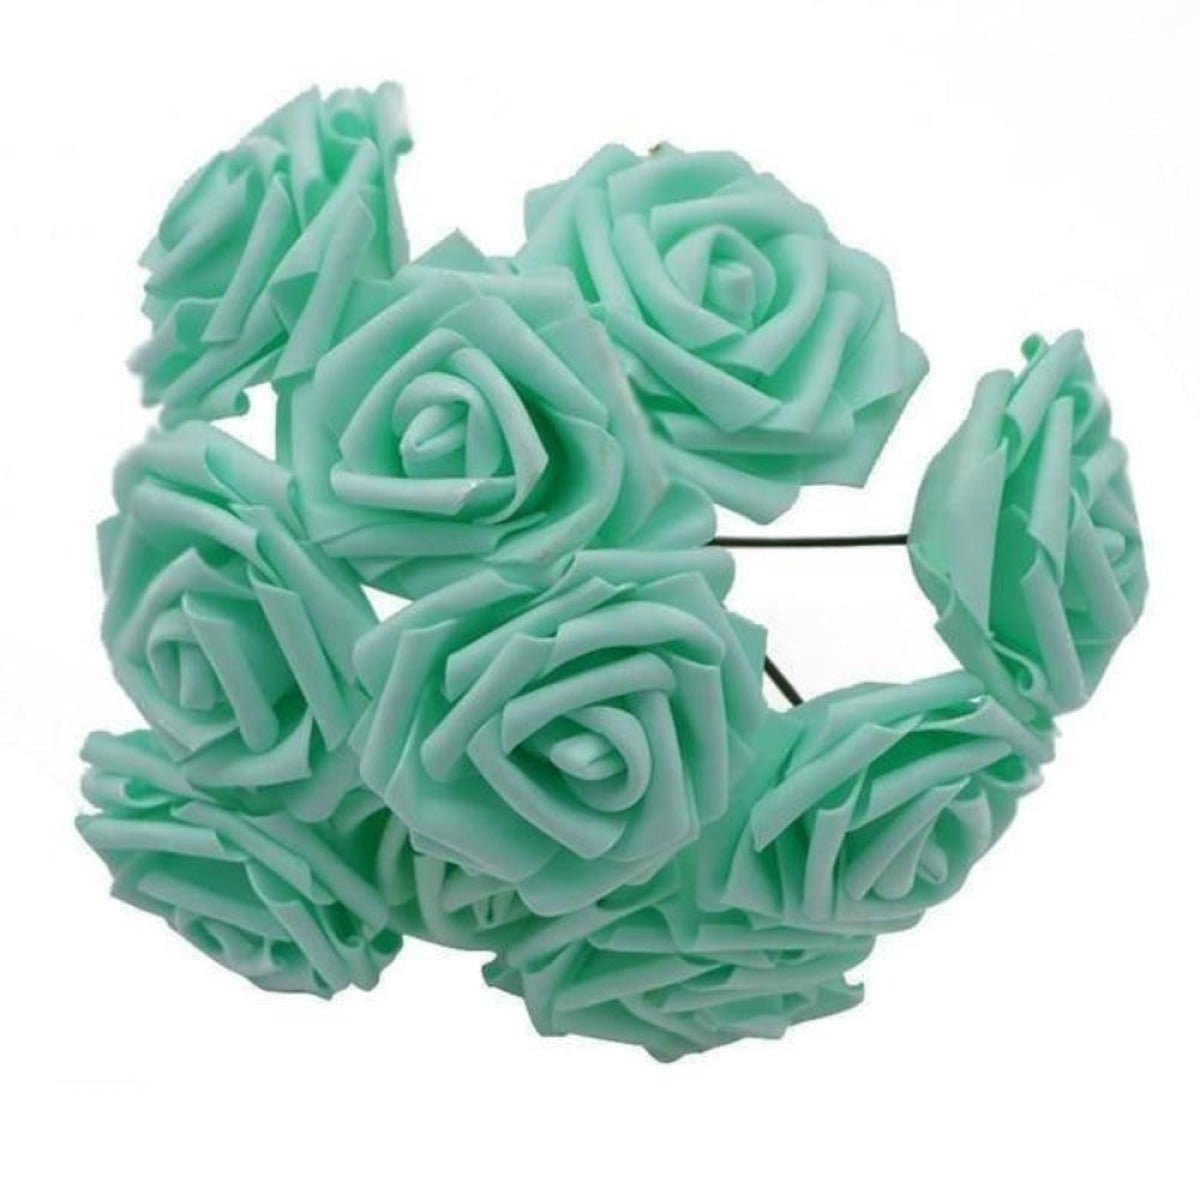 10-100pcs 8cm Artificial Flowers Foam Rose Fake Bride Bouquet Wedding - 10 - Mint Green - Asia Sell